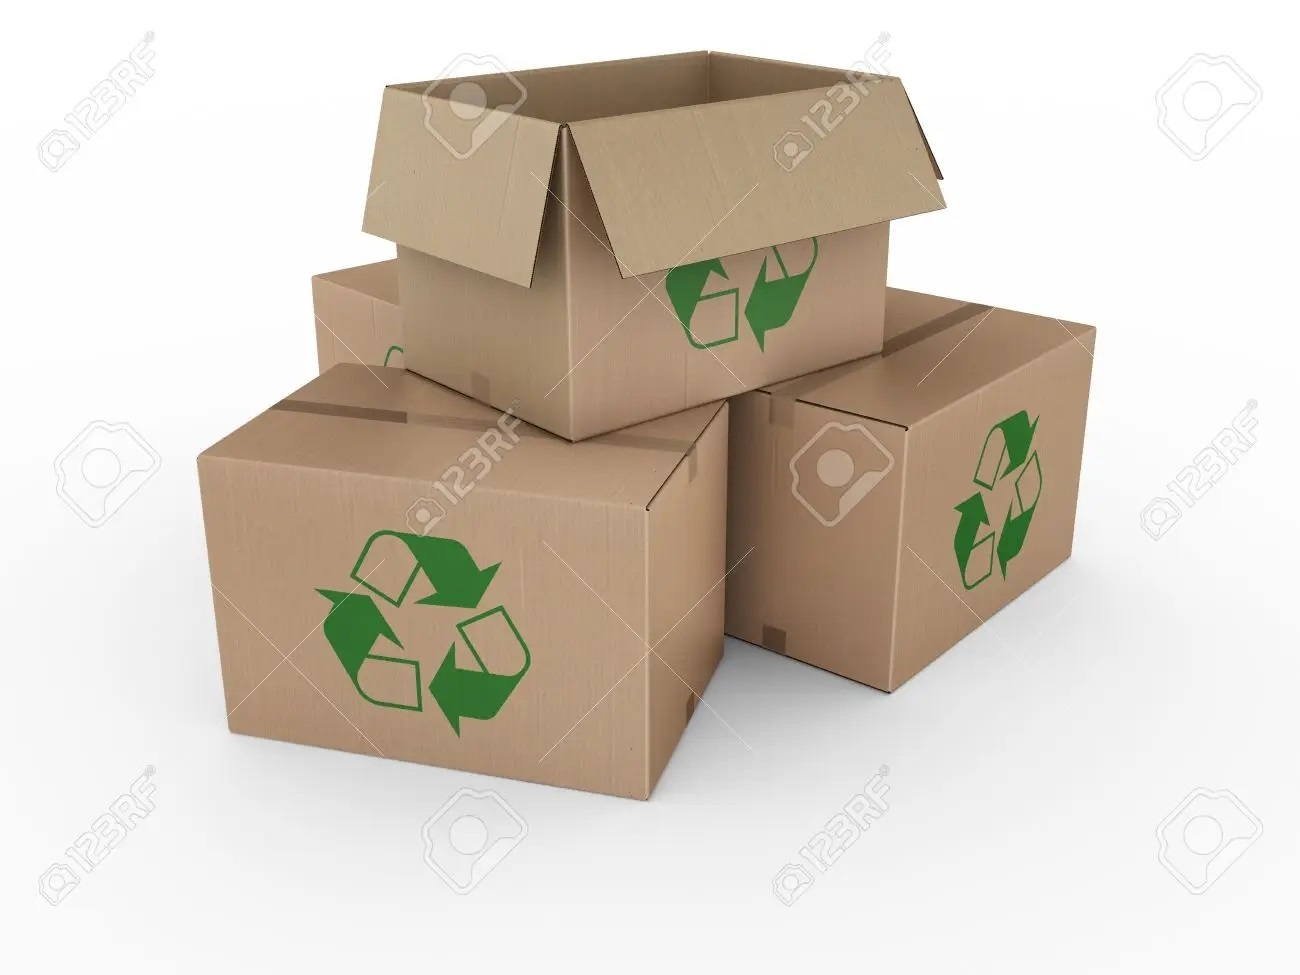 caja_carton_reciclada